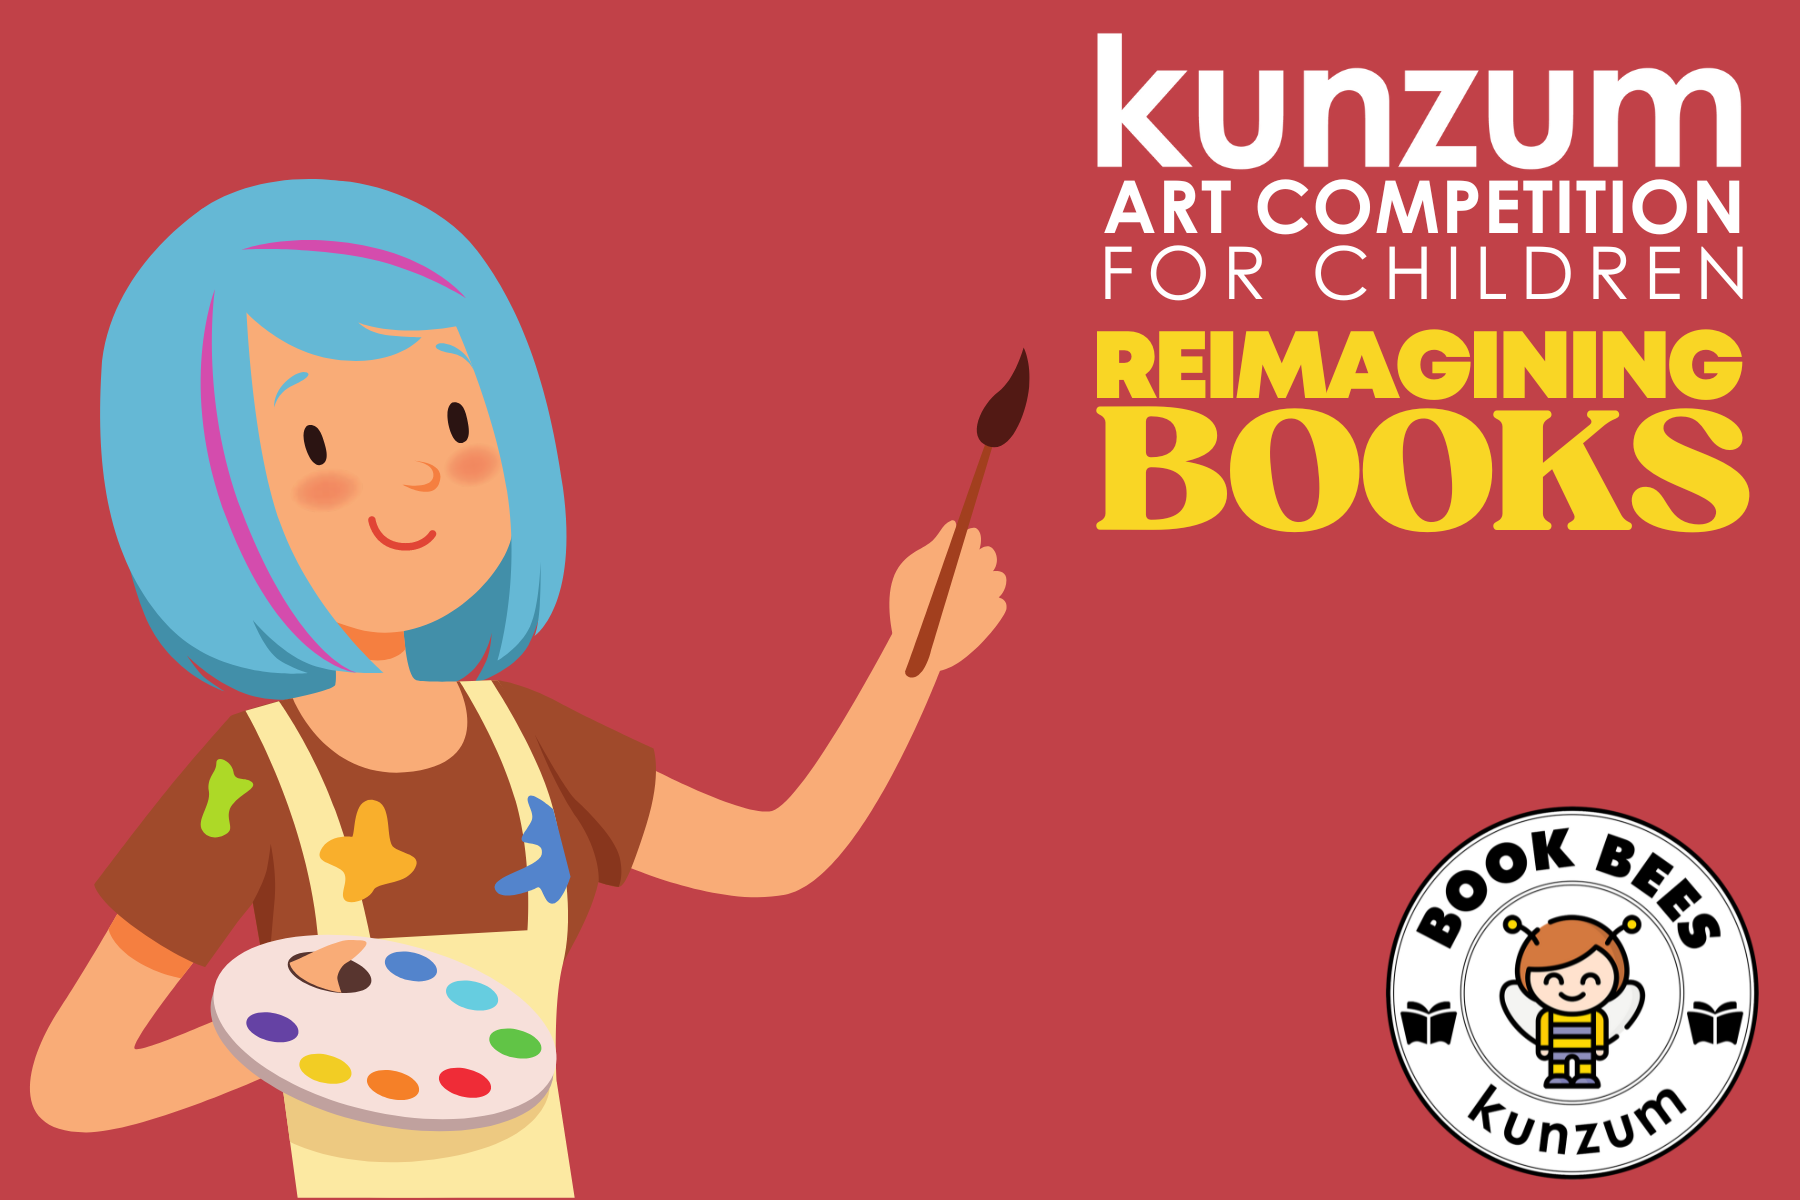 Kunzum Art Competition for Children: Reimagining Books